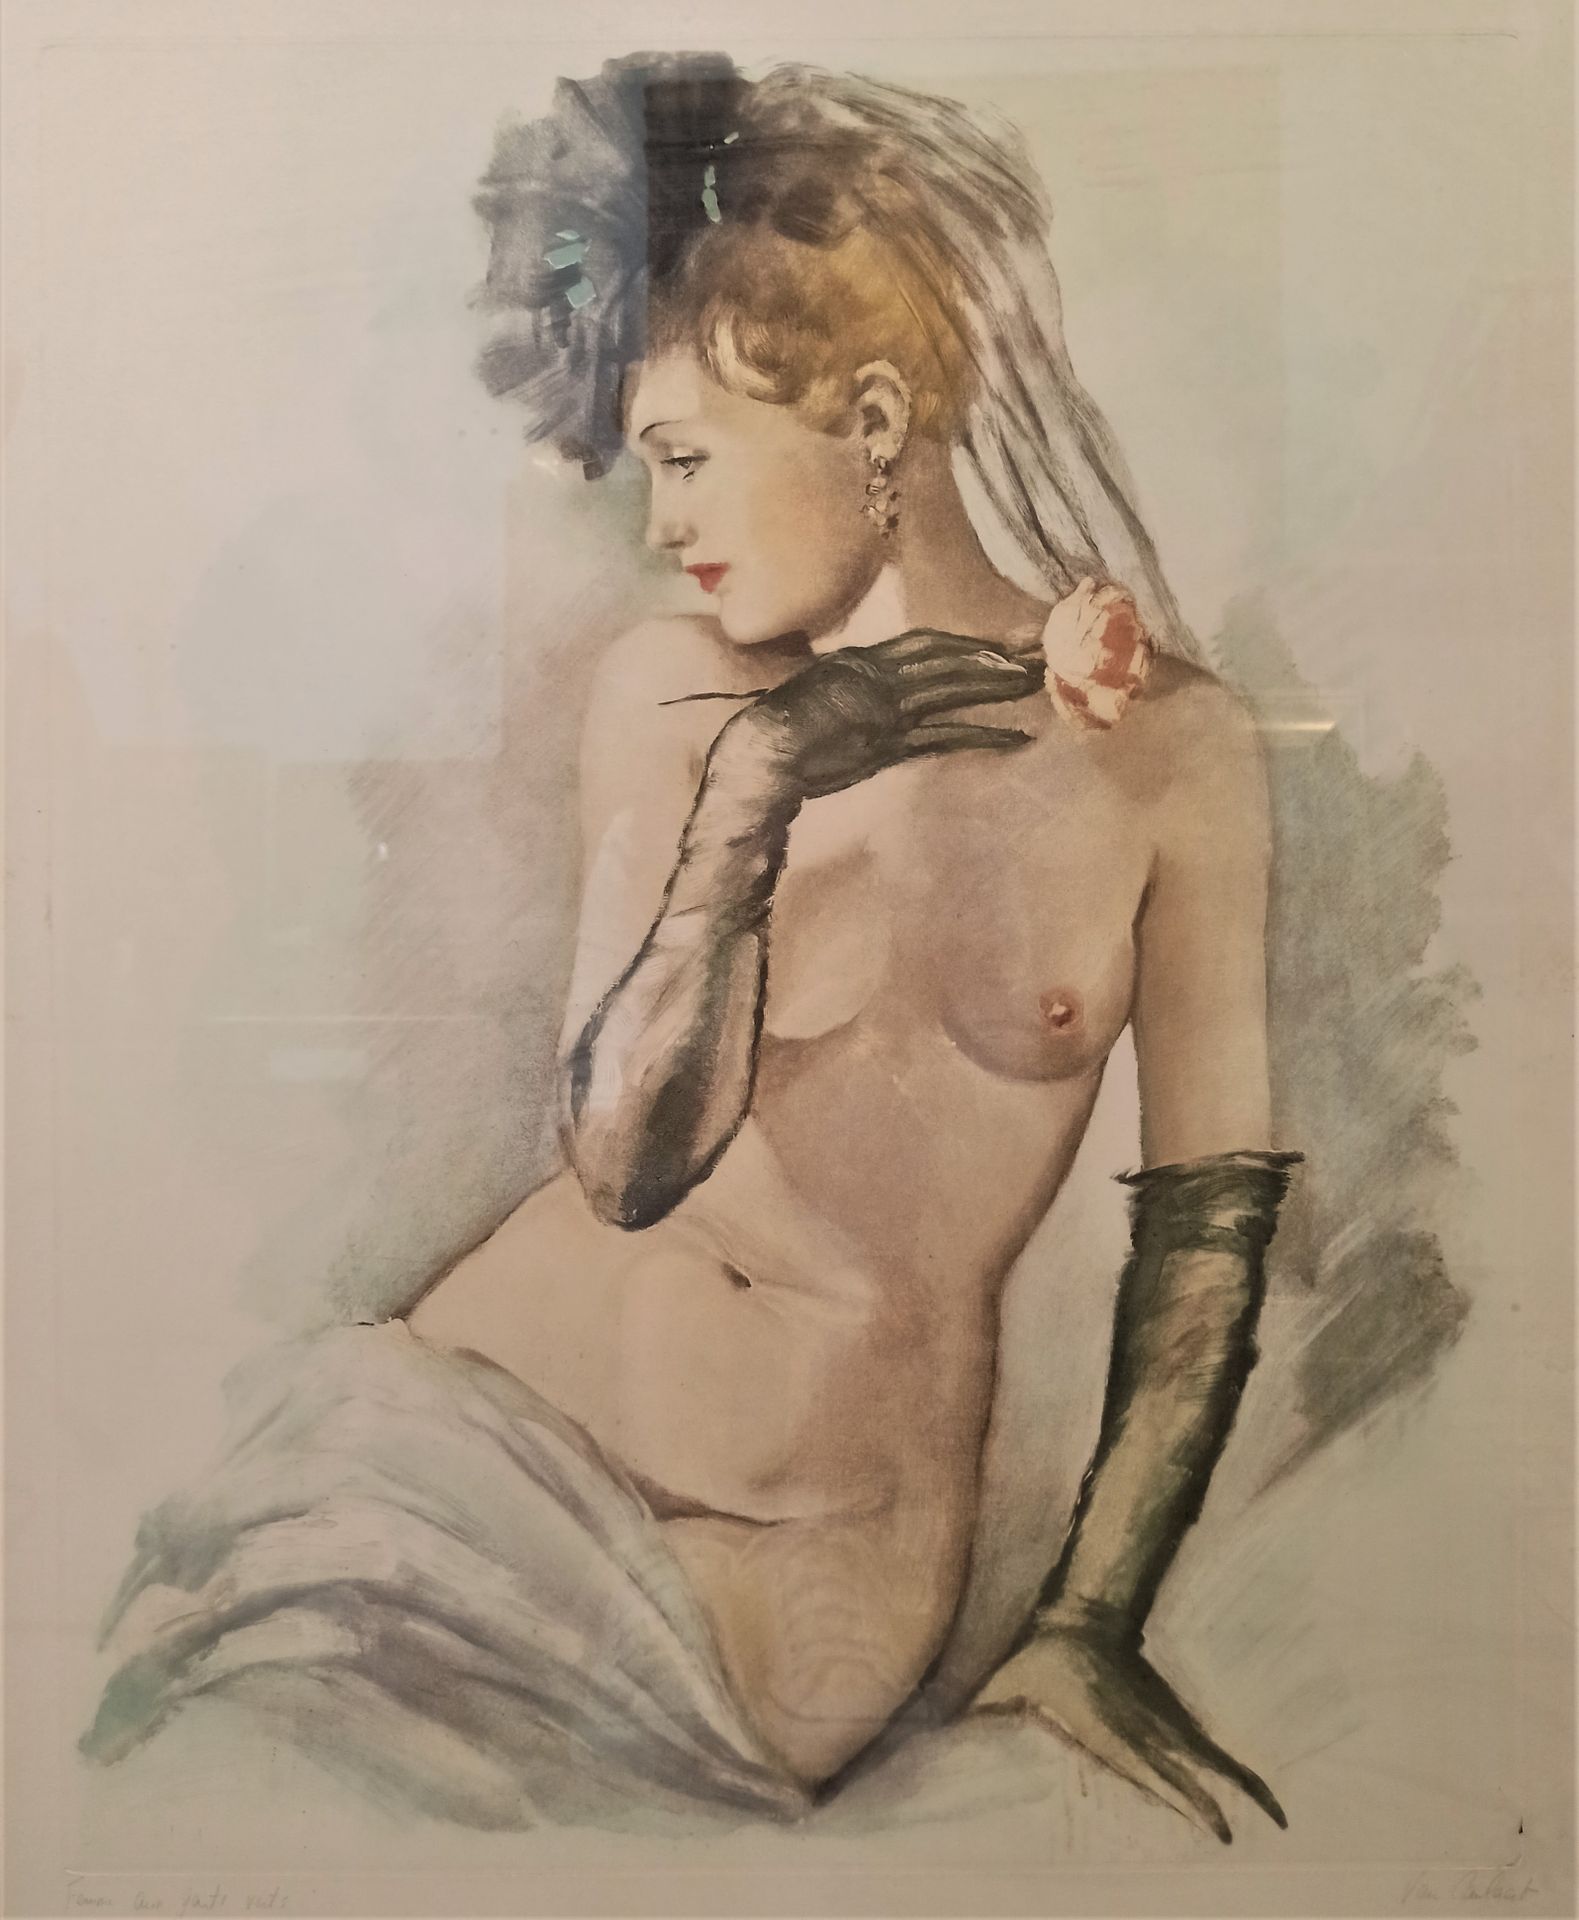 Null 让-多米尼克-范考拉特(Jean-Dominique VAN CAULAERT) (1897-1979)

戴绿色手套的女人，花花绿绿的围巾

两幅雕&hellip;